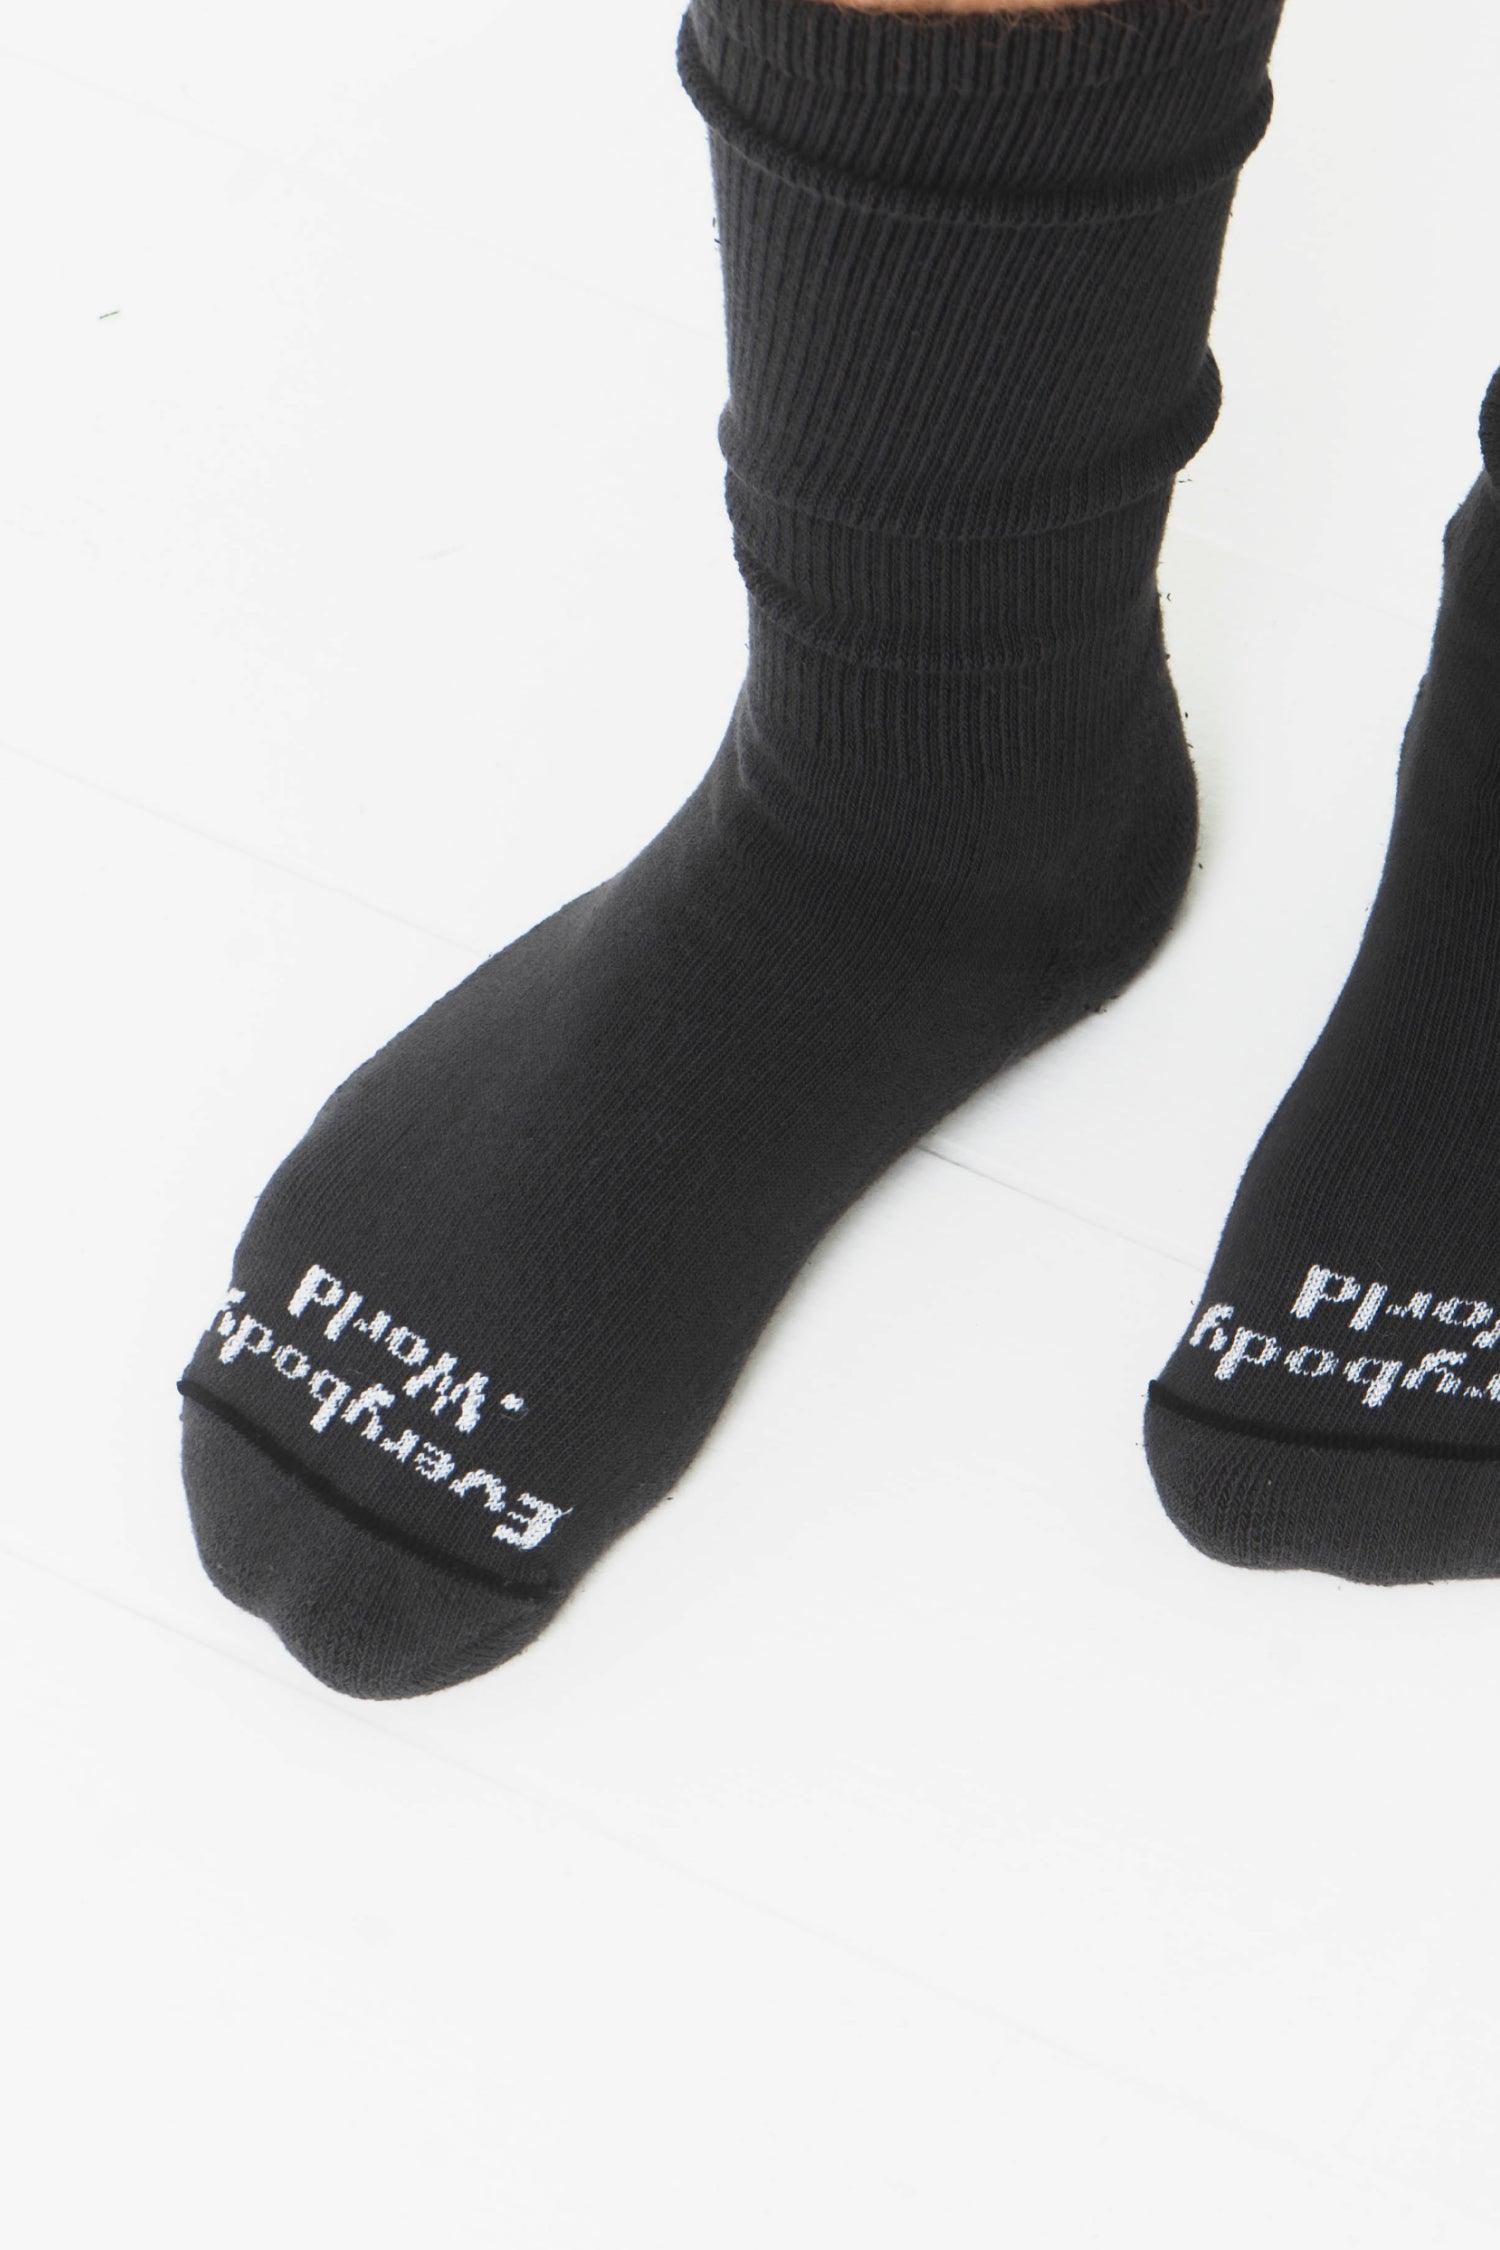 Squishy Socks - Everybody.World